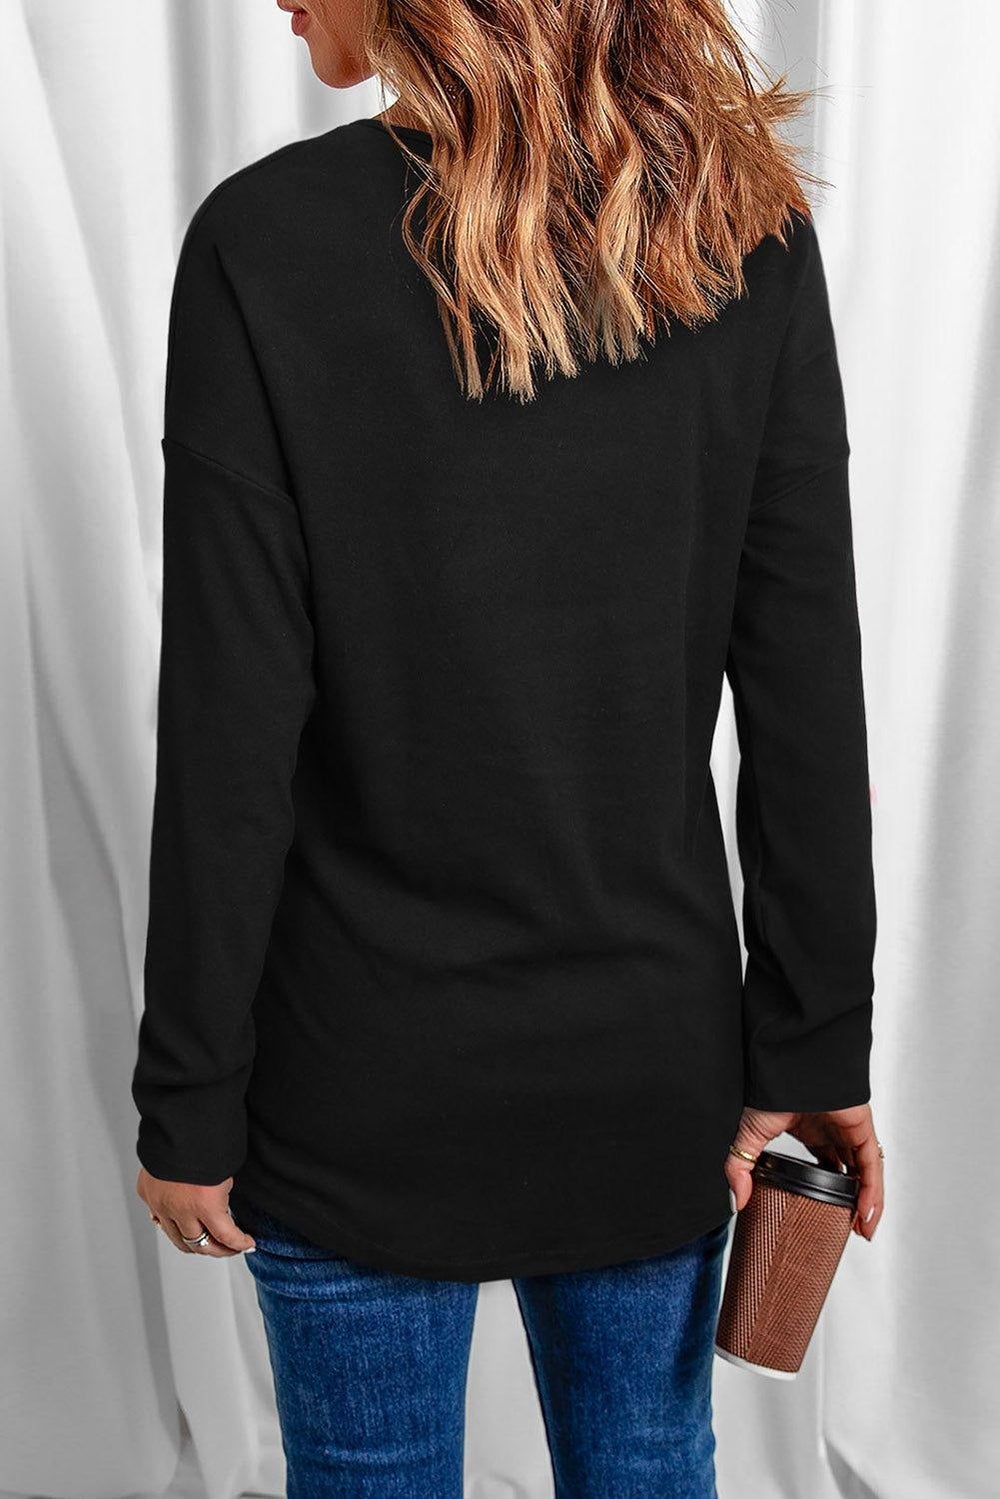 Football Long Sleeve Shirt - Klazzi Fashion Boutique